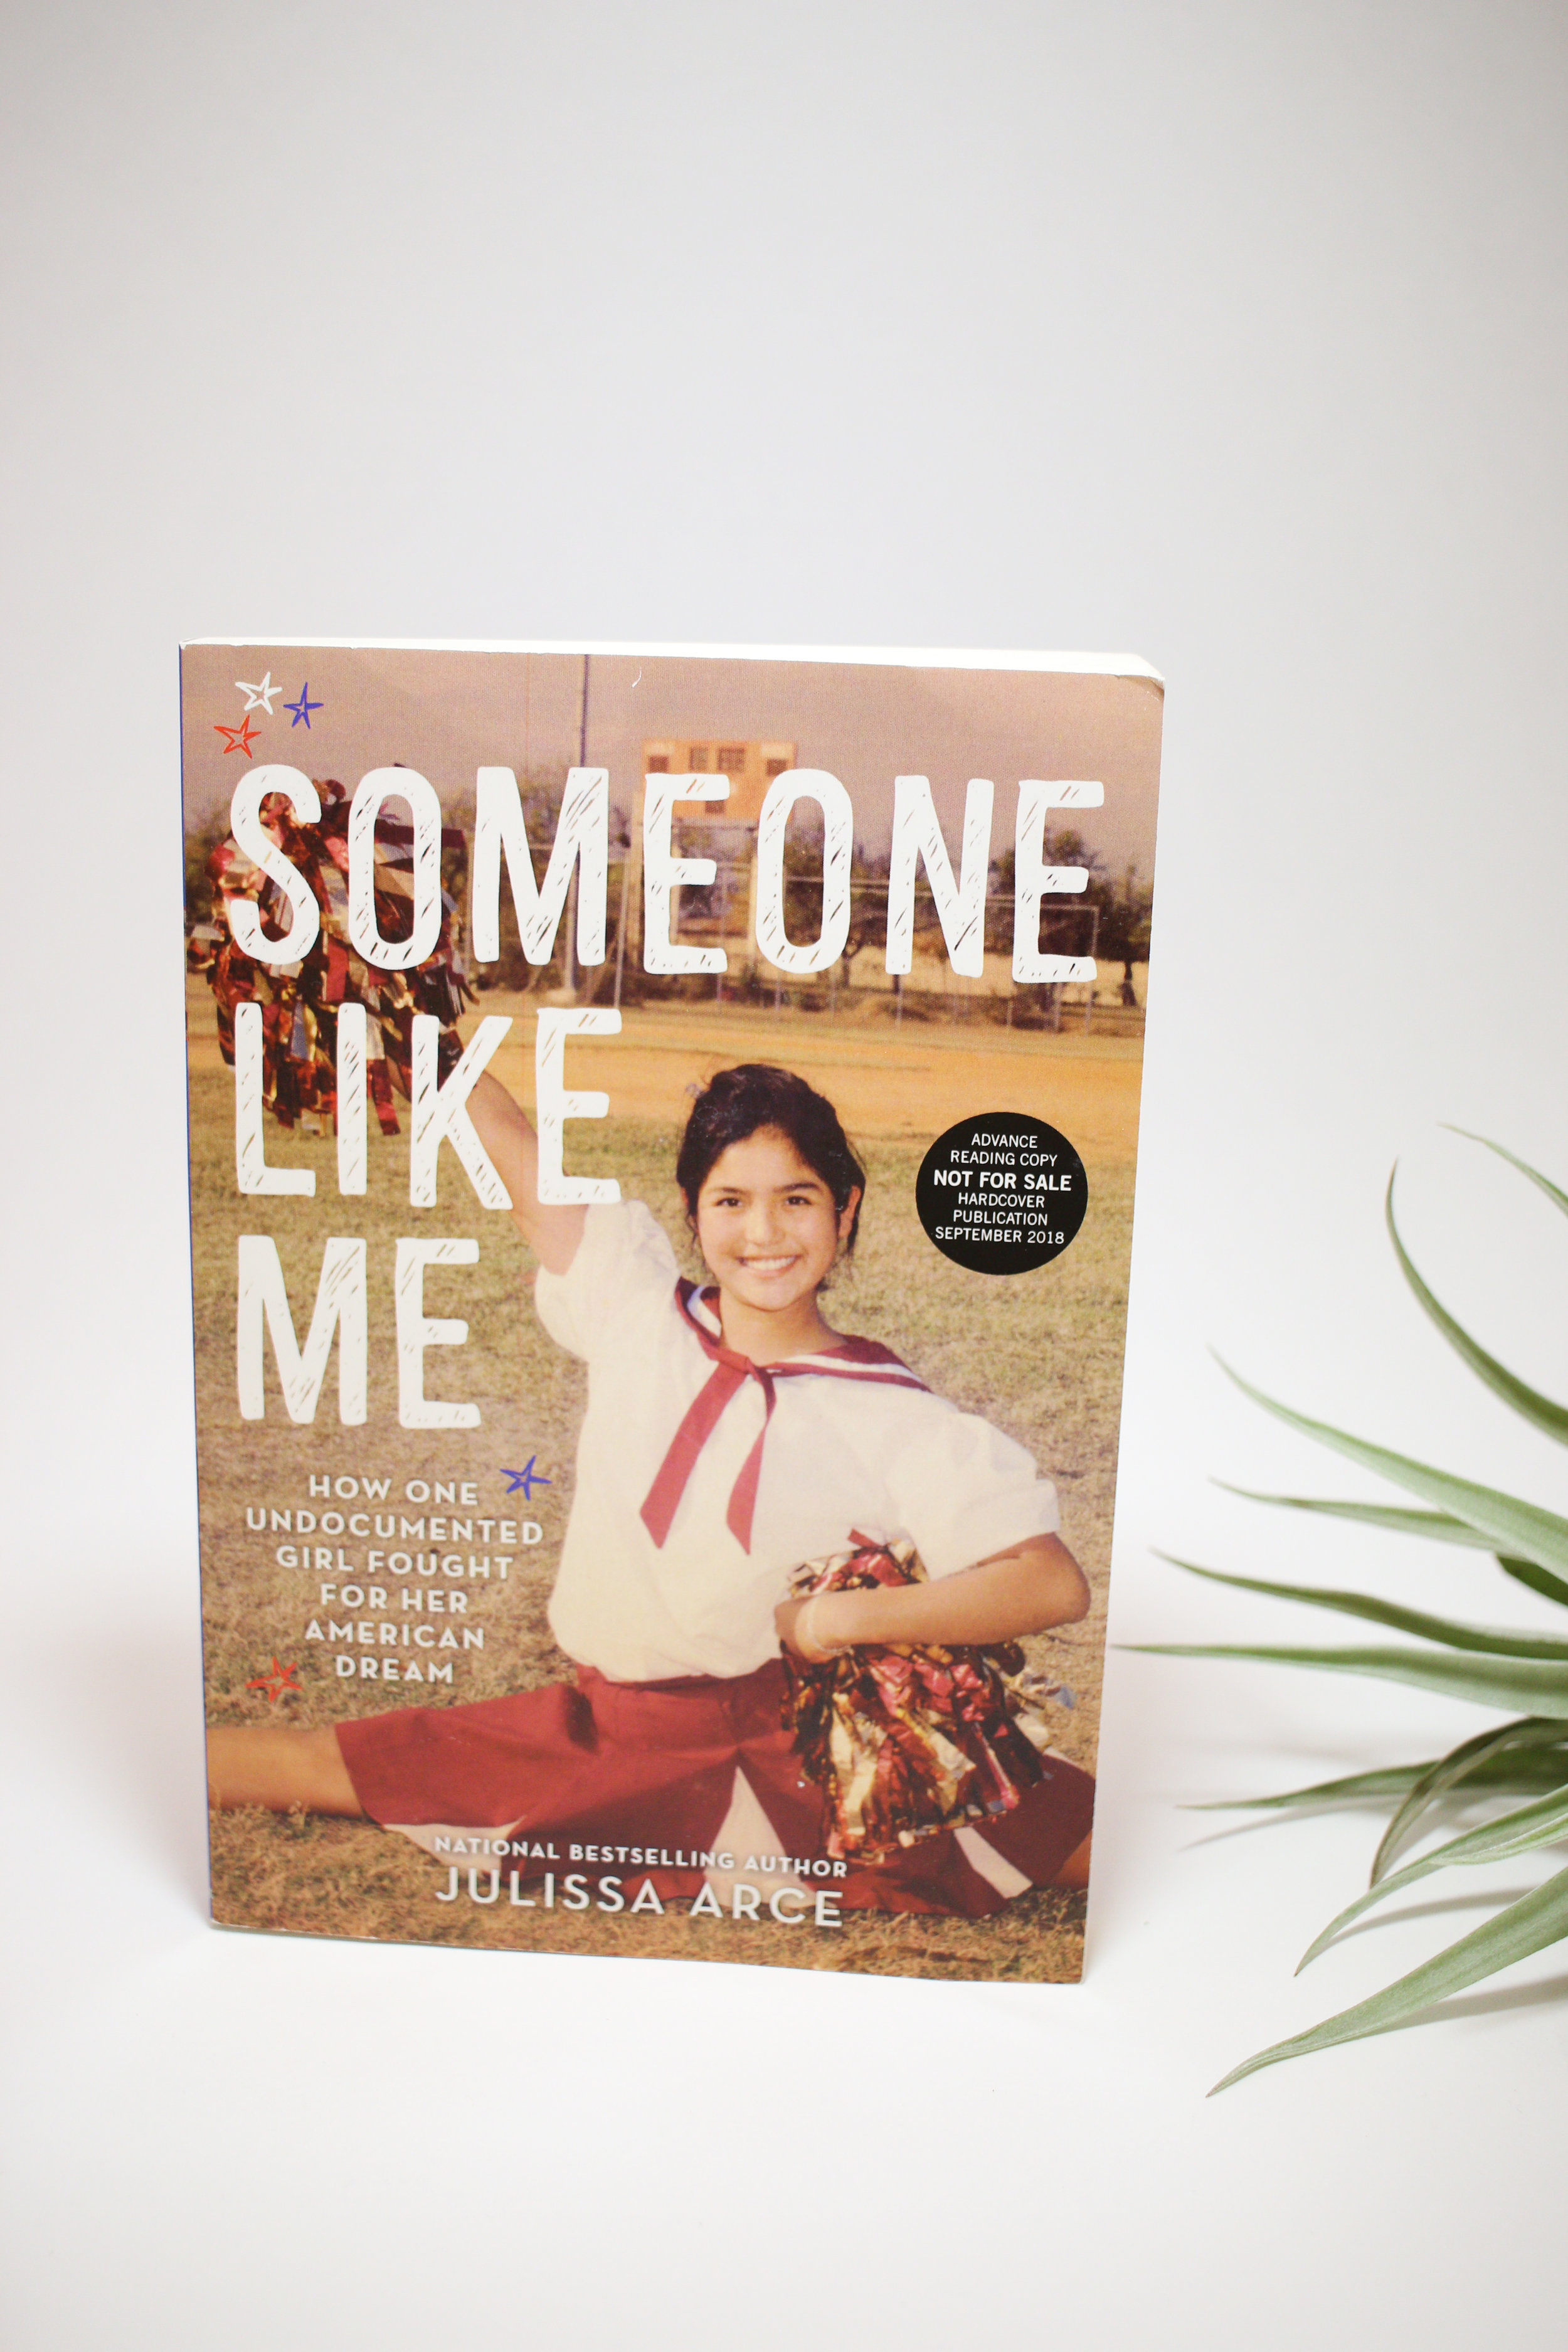 "Someone Like Me" by Julissa Arce